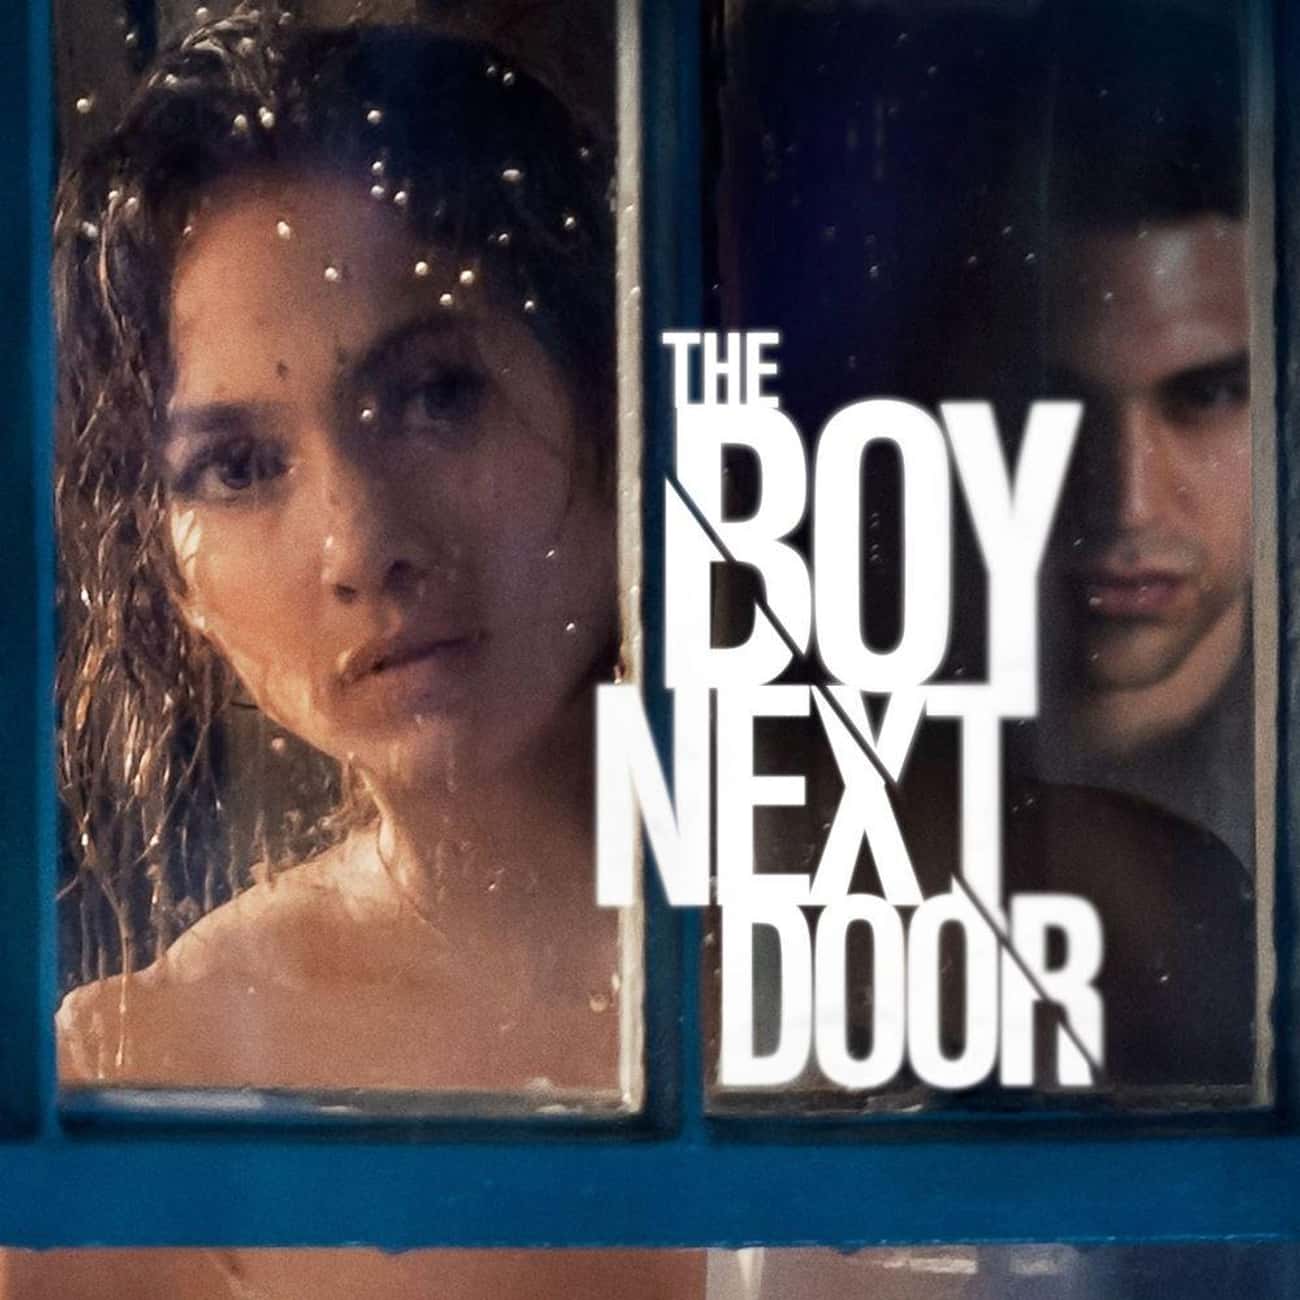 Boy next door earth. Jennifer Lopez the boy next Door. Boy next Door группа. The boy next Door заступился. The boy next Door драка.